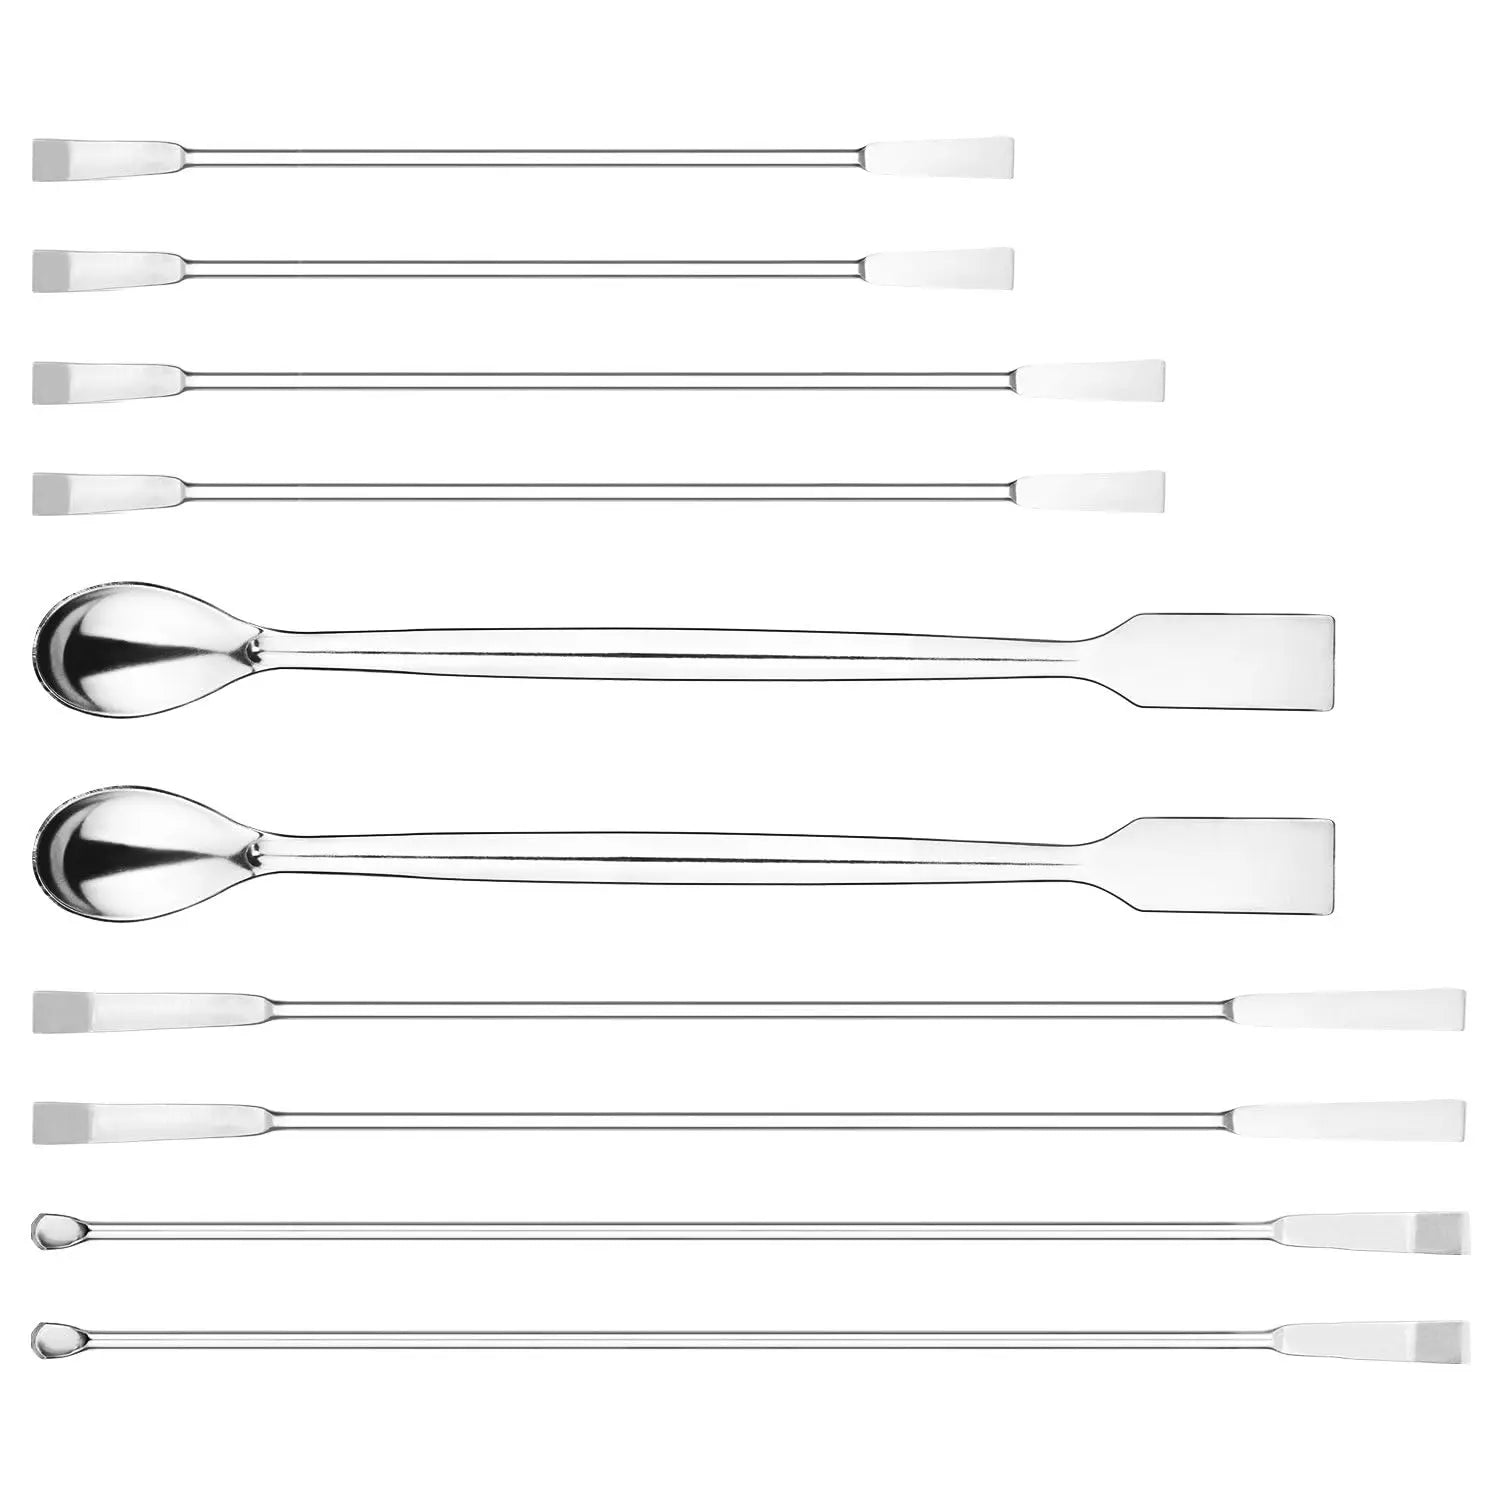 10 Pcs Lab Micro Spoon and Spatula Set Labasics